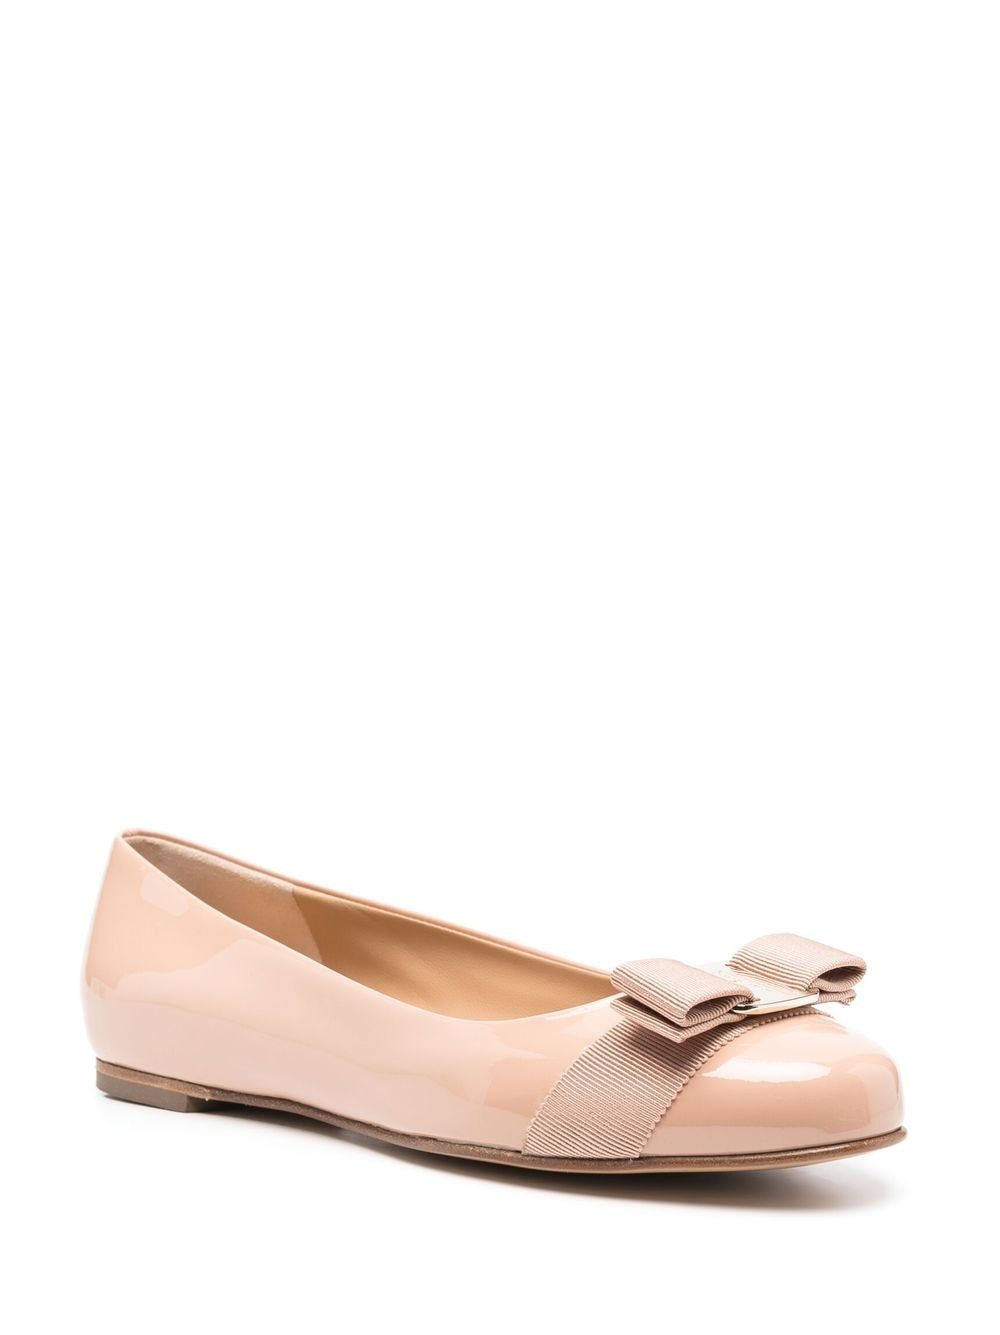 FERRAGAMO Blush Pink Patent Leather Ballerina Flats for Women